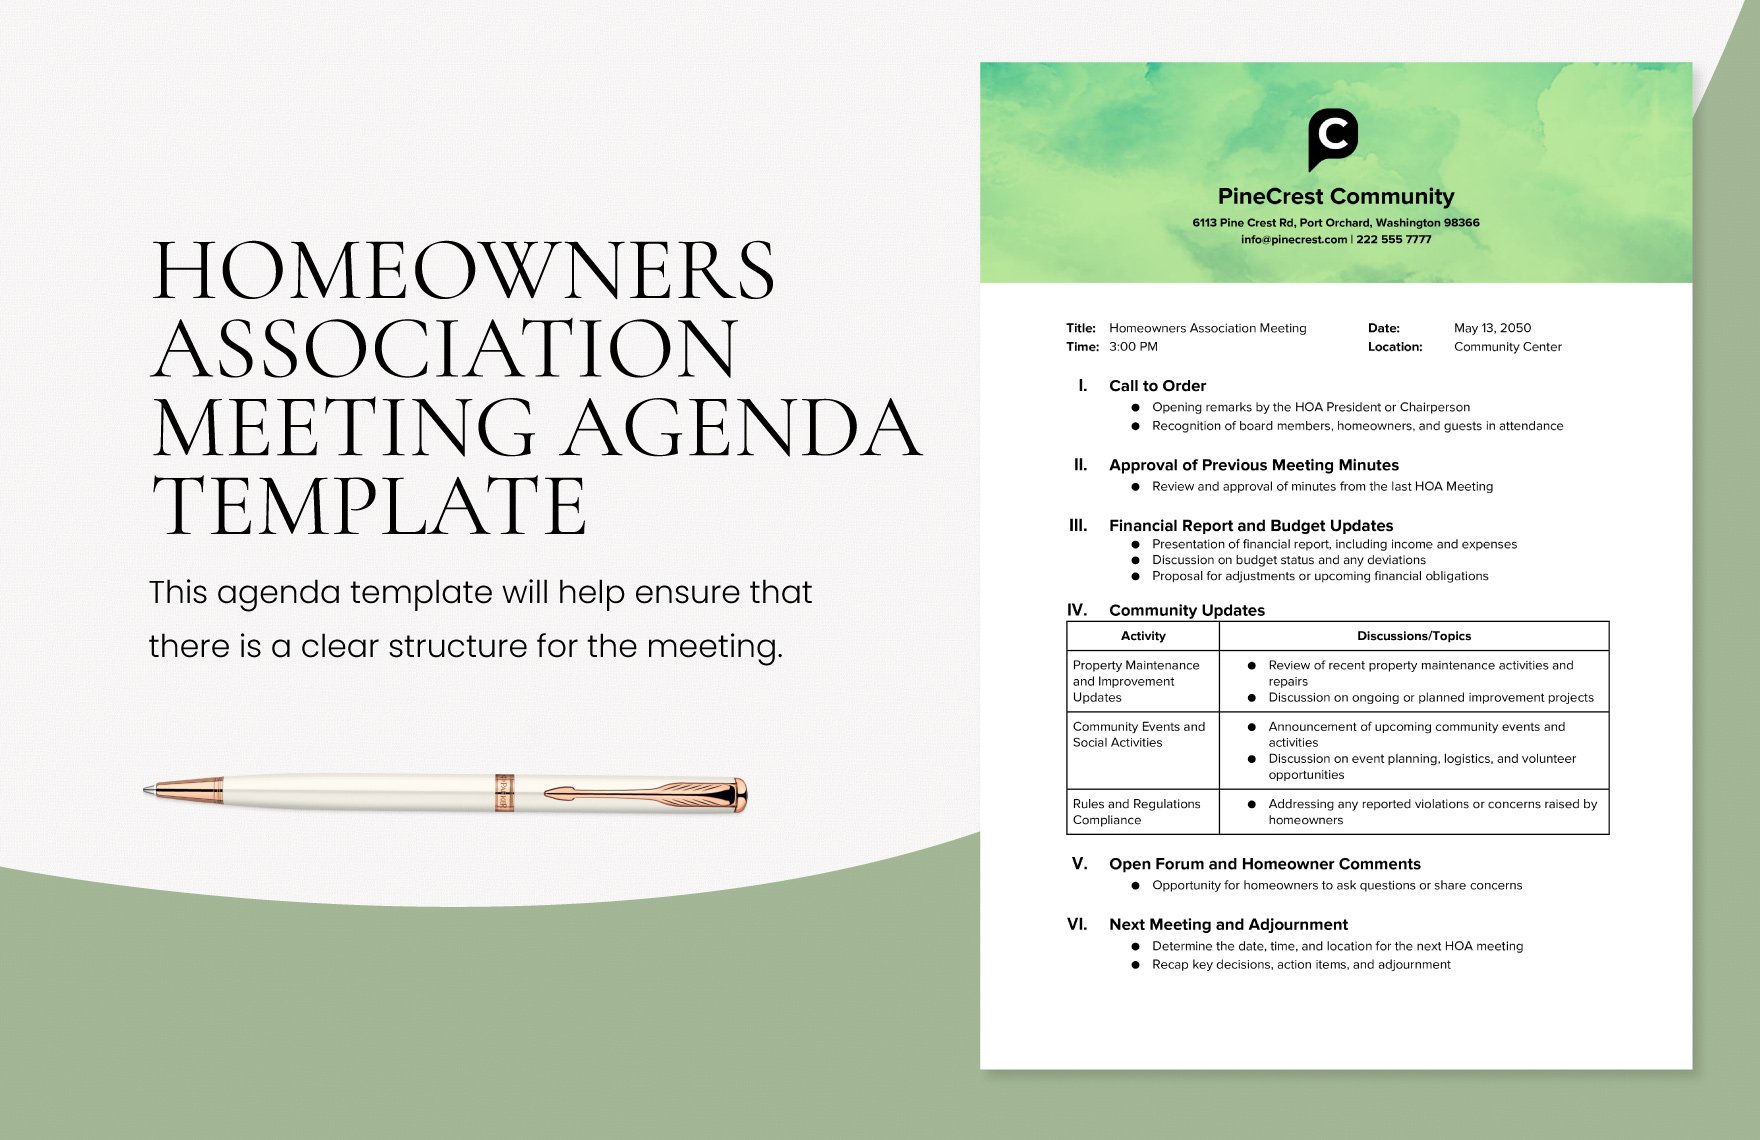 Homeowners Association Meeting Agenda Template in Word, Google Docs, PDF